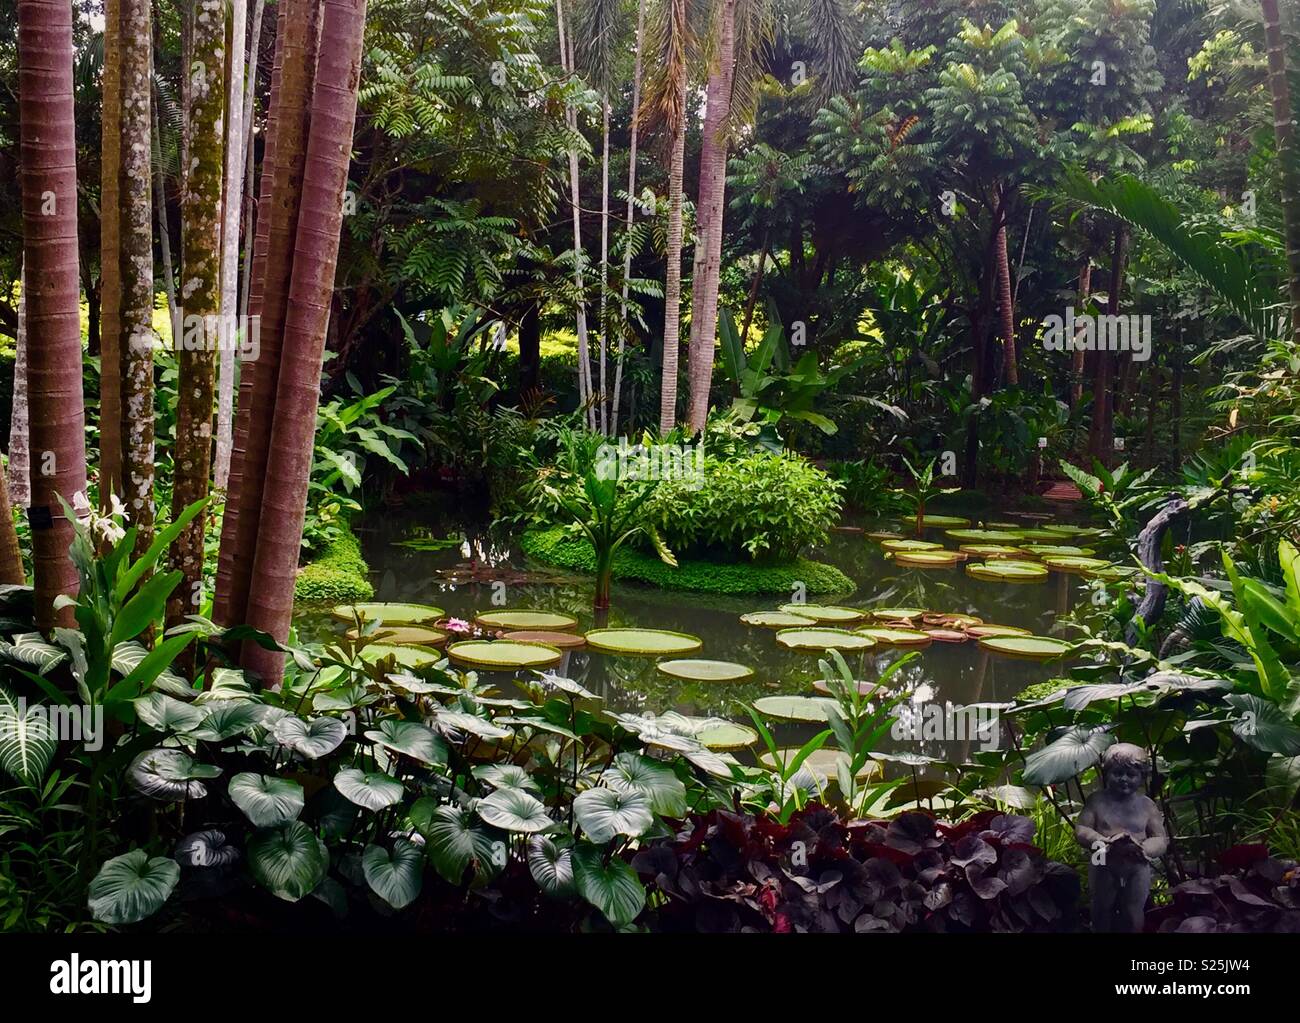 Giardino paesaggistico tropicale- Singapore Botanic Gardens Foto Stock